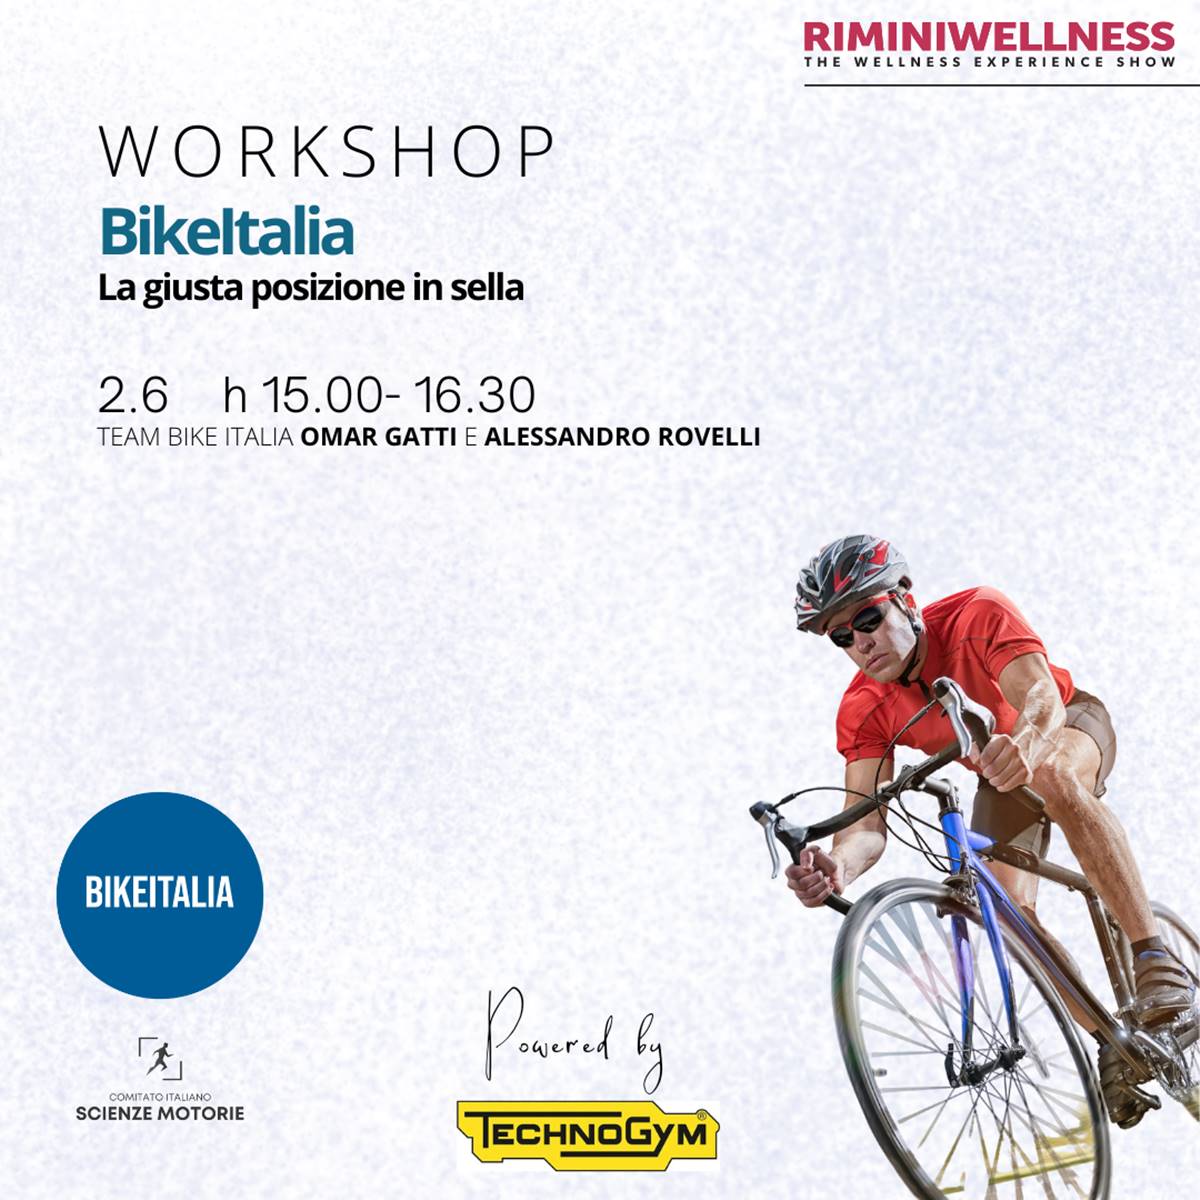 Workshop-Bikeitalia-Rimini-Wellness